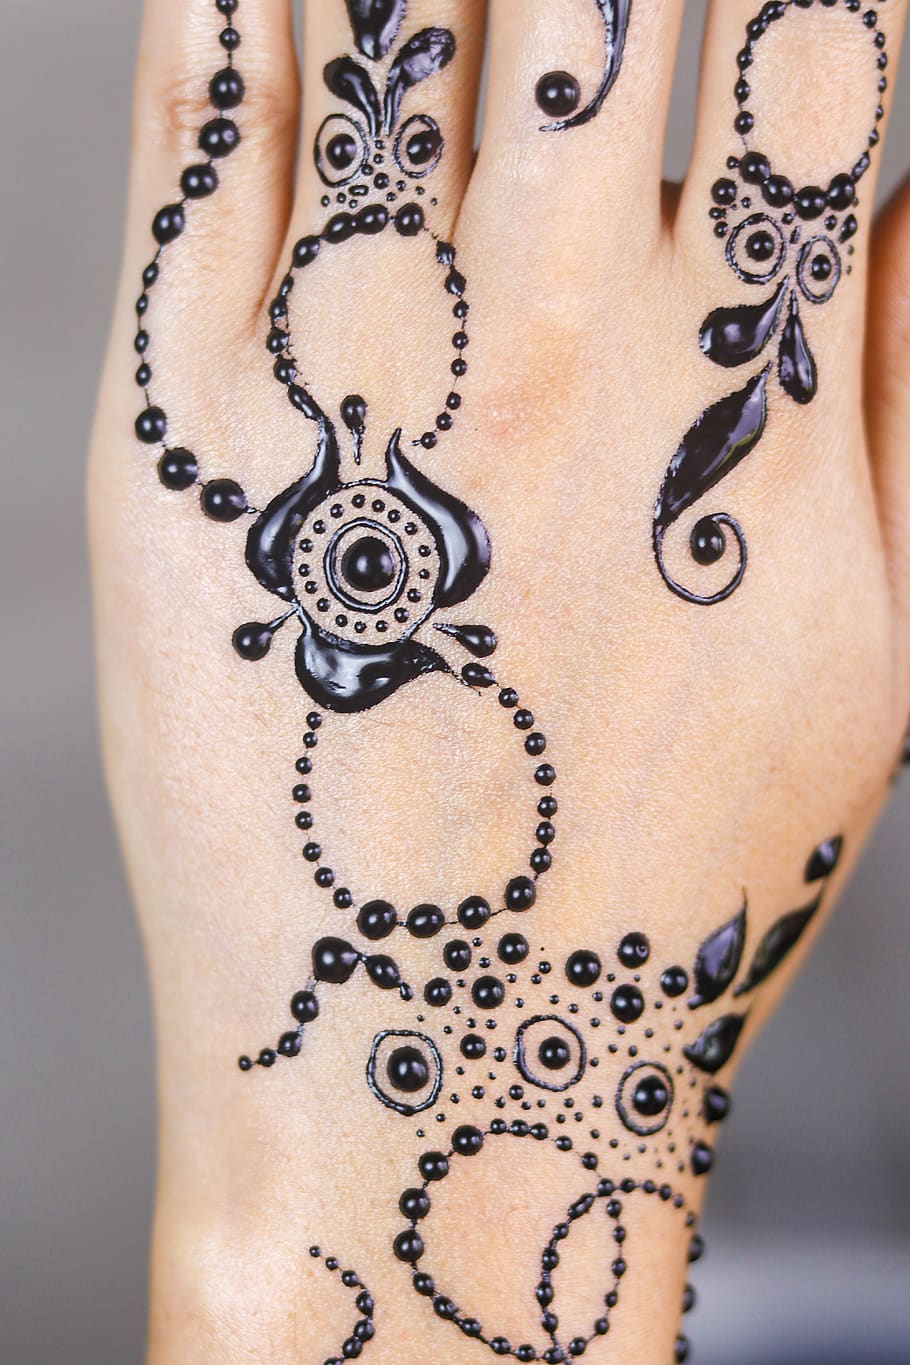 henna, hands, mehendi, pattern, female, palms, design, decoration, india, art